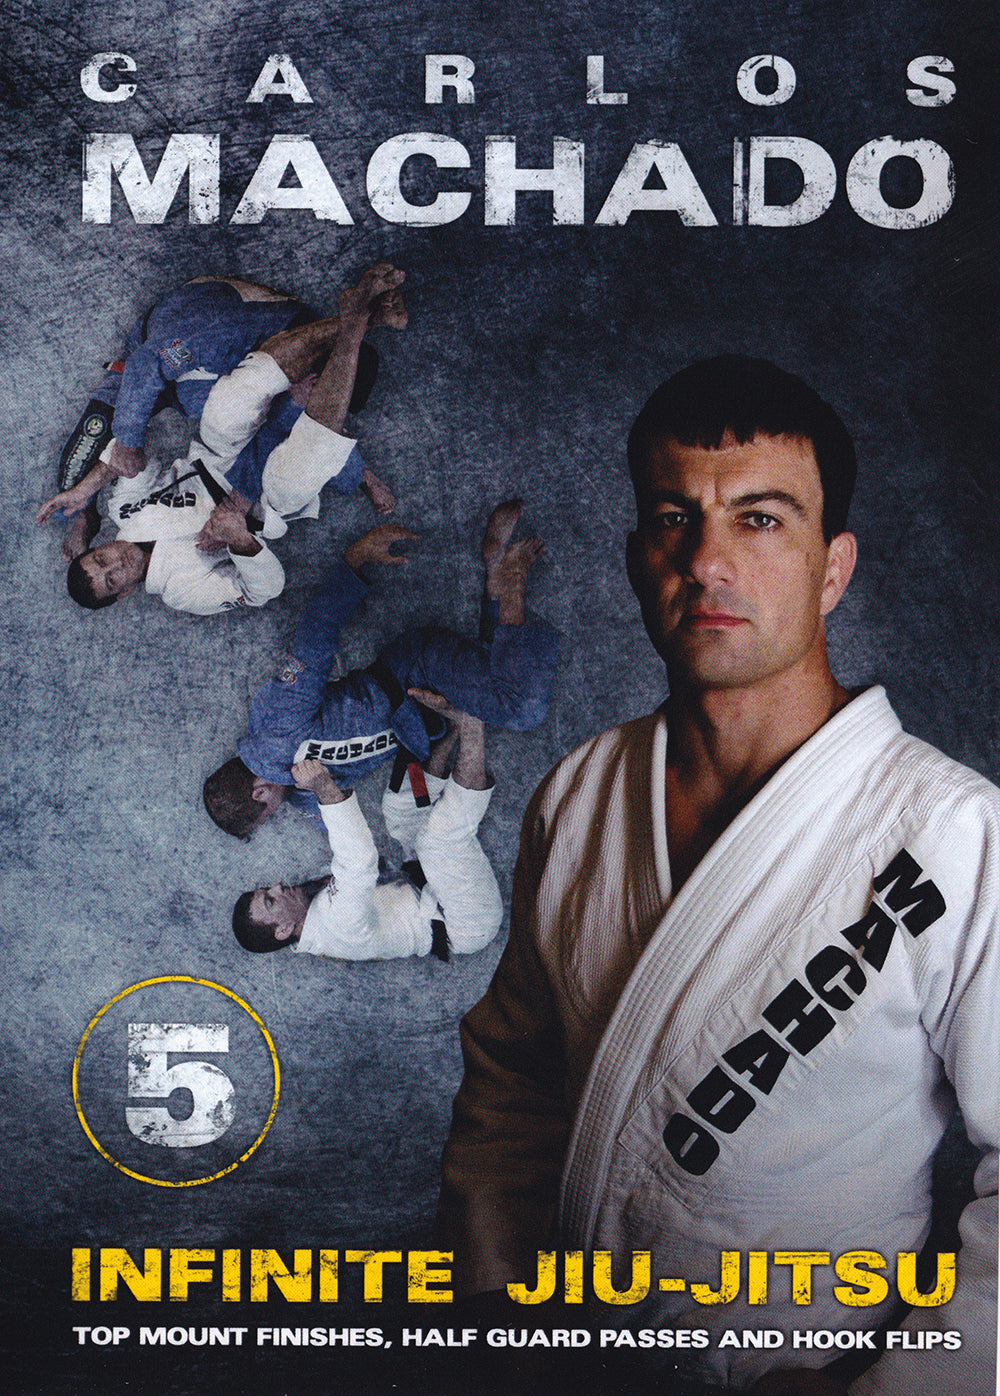 Infinite Jiu-jitsu 5: Top Mount Finishes, Half Guard Passes and Hook Flips DVD by Carlos Machado - Budovideos Inc